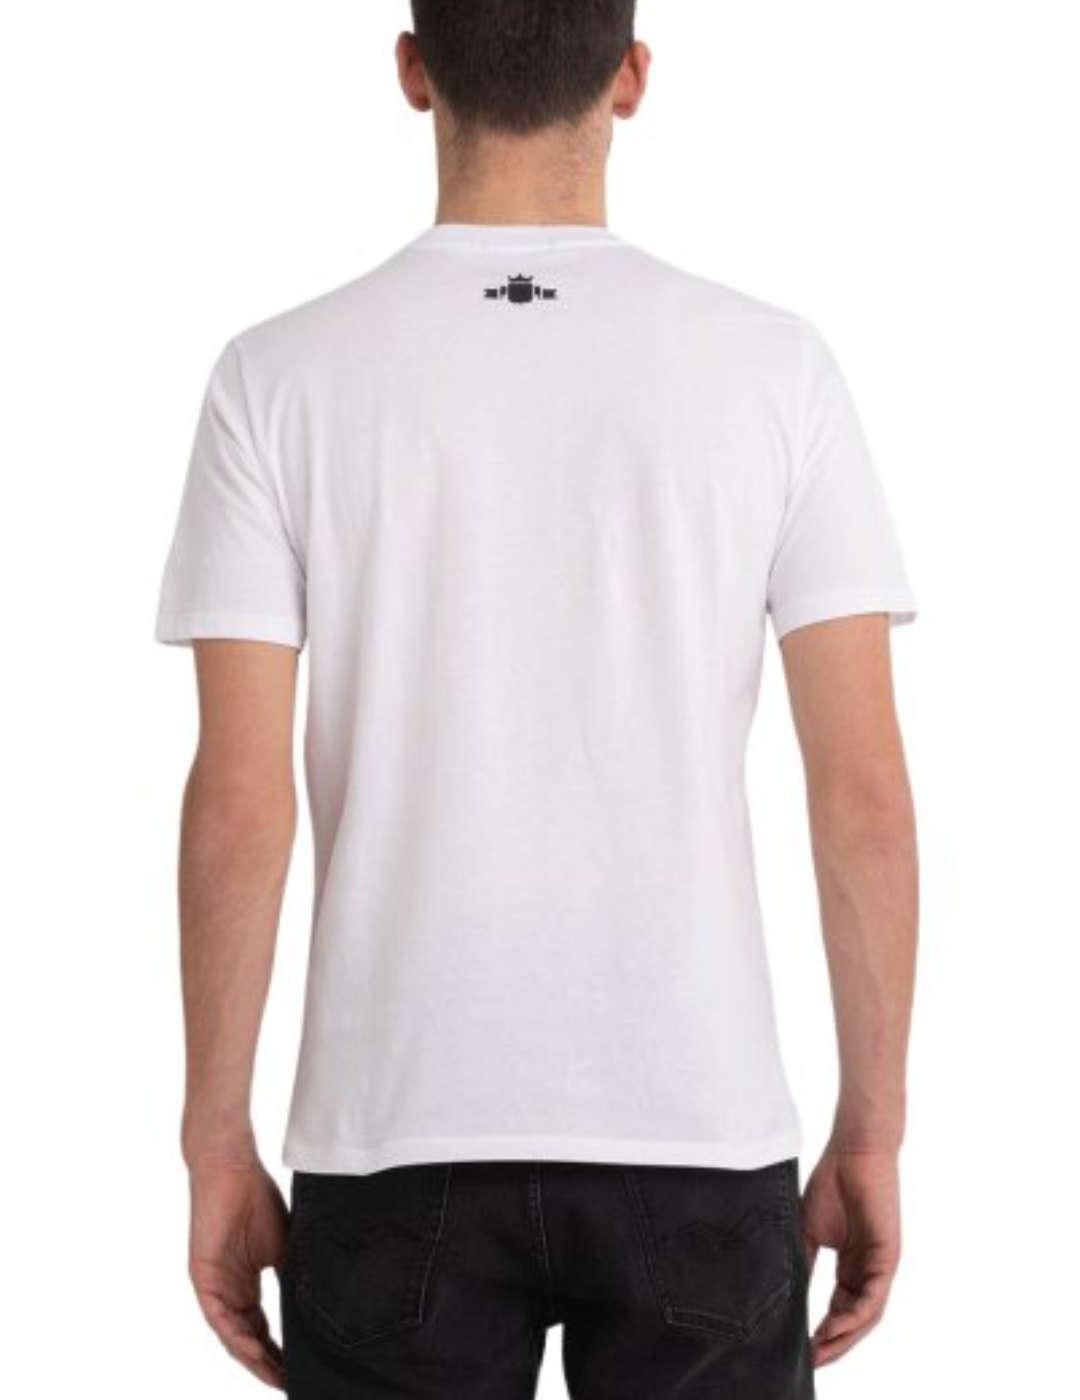 Camiseta Replay blanca logo manga corta para hombre